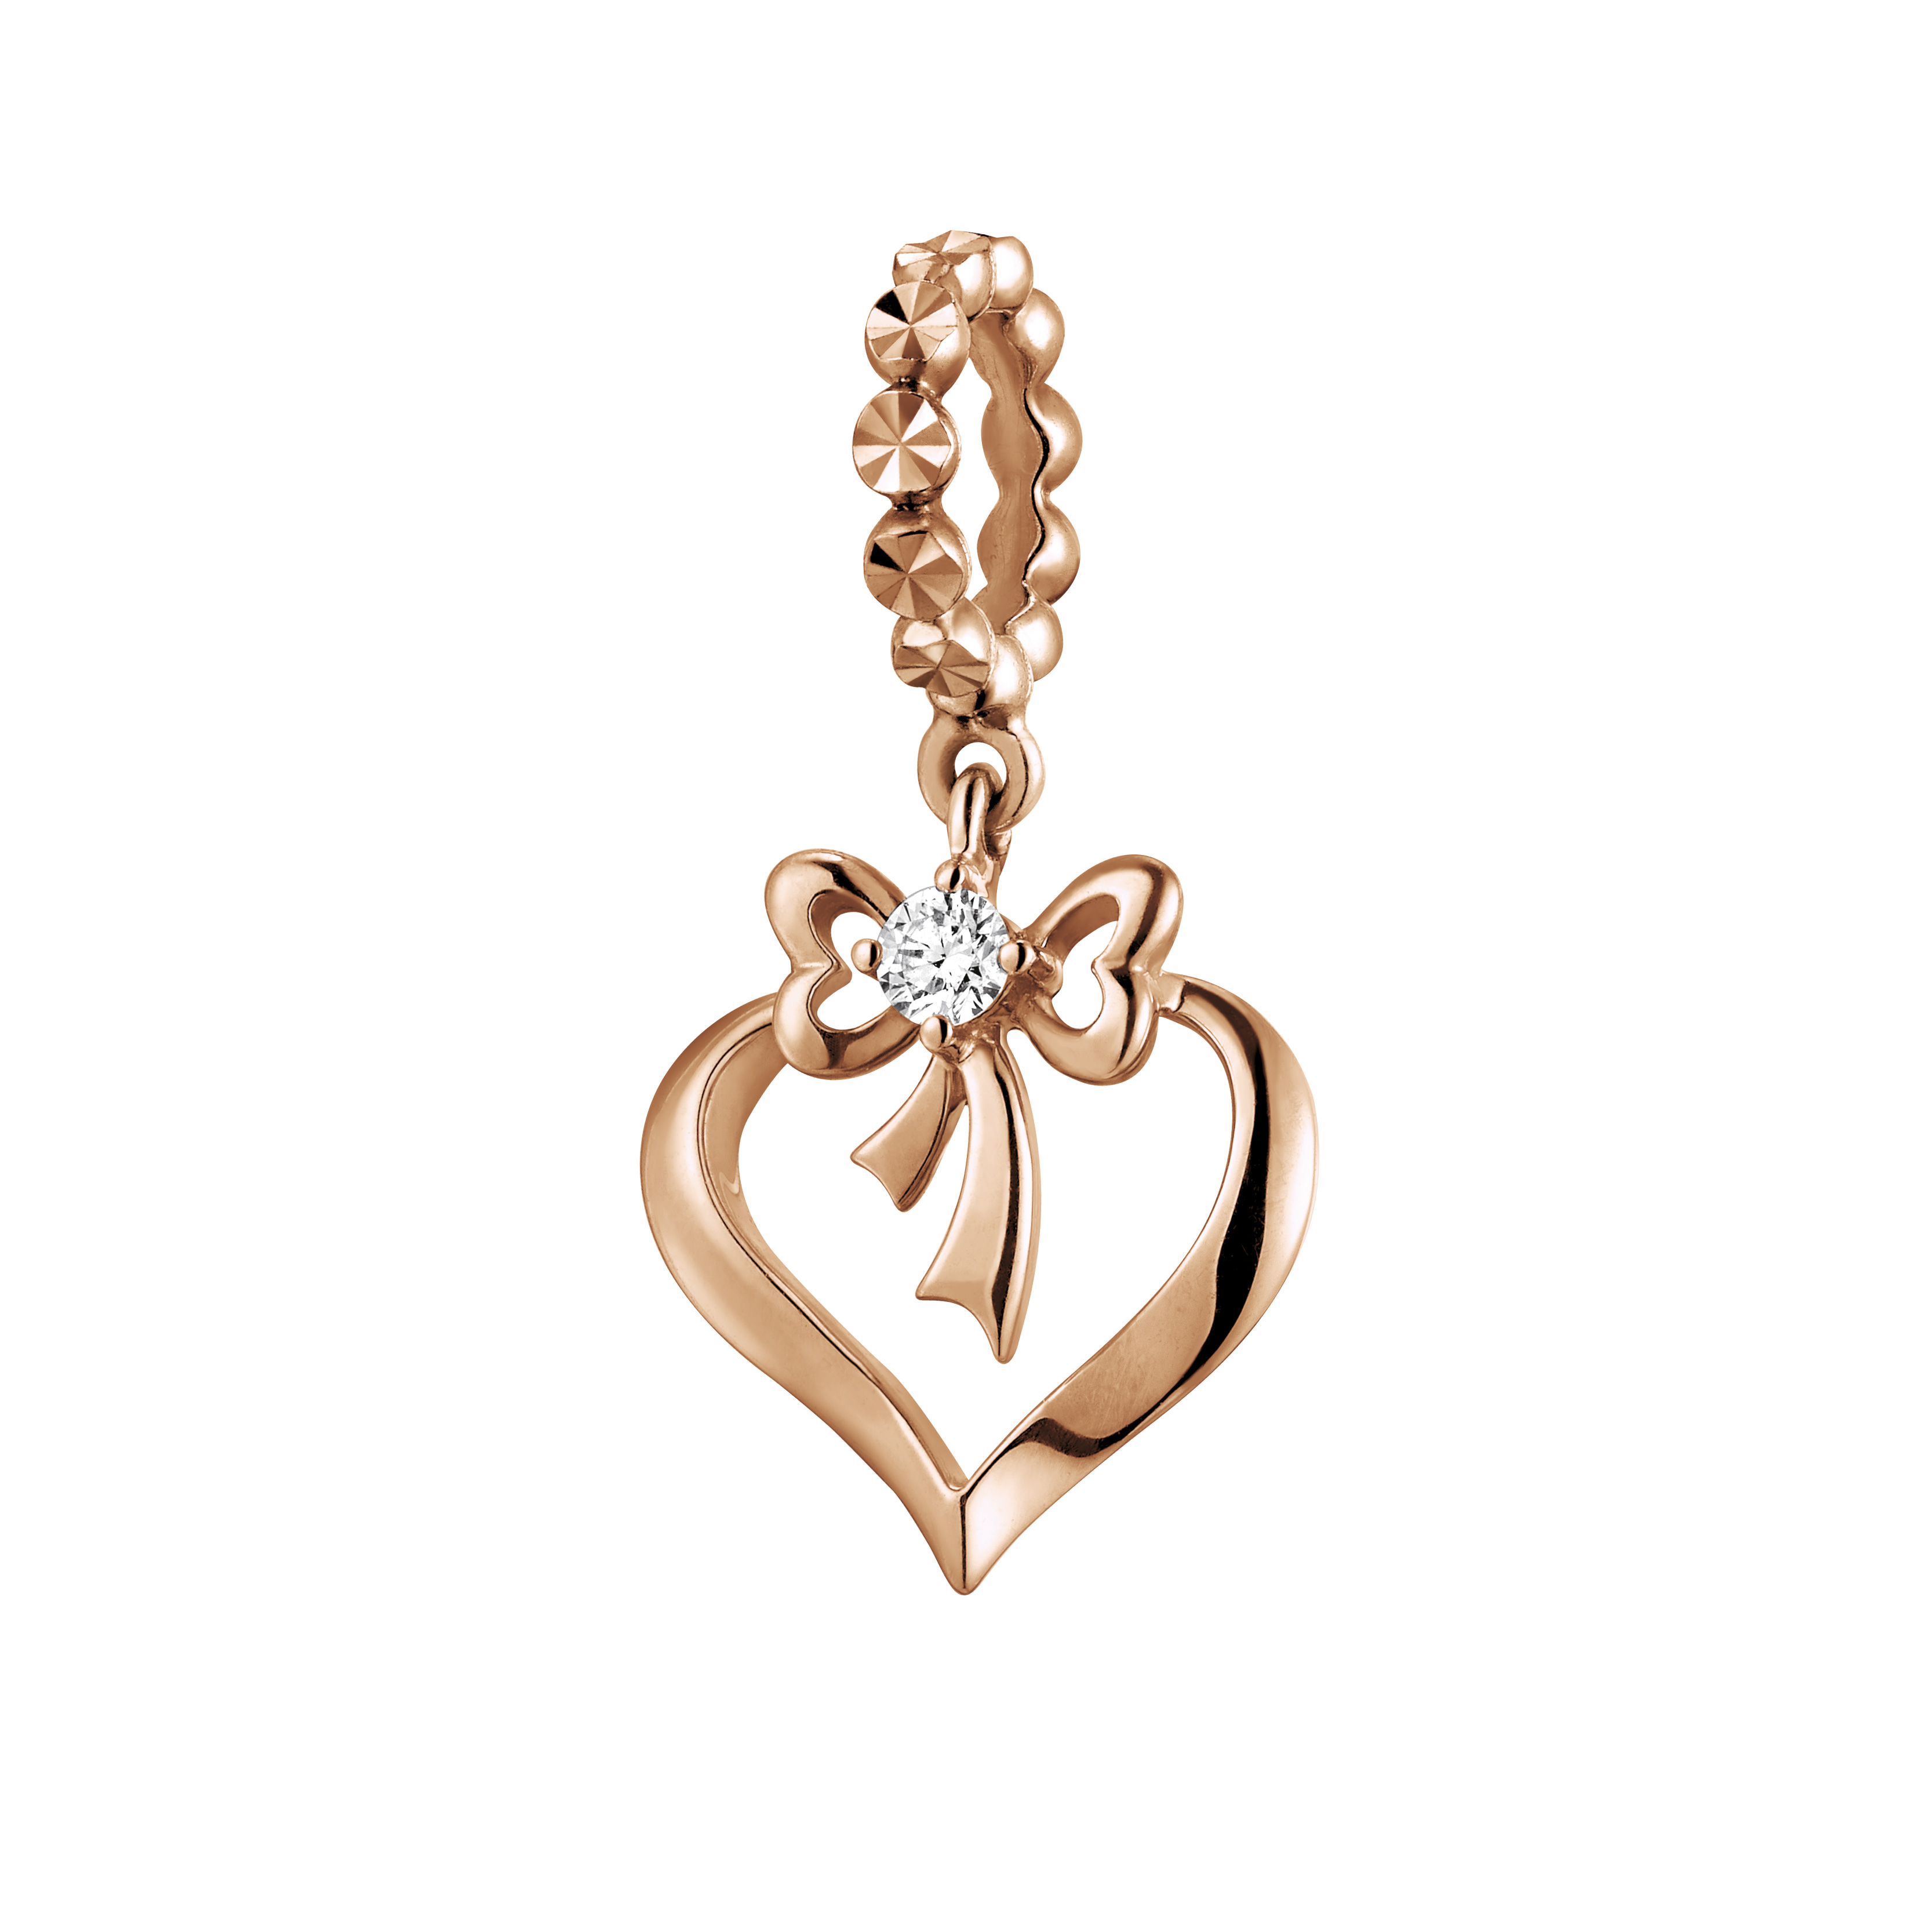 Dear Q "Bow of Butterfly" 18K Rose Gold Diamond Charm